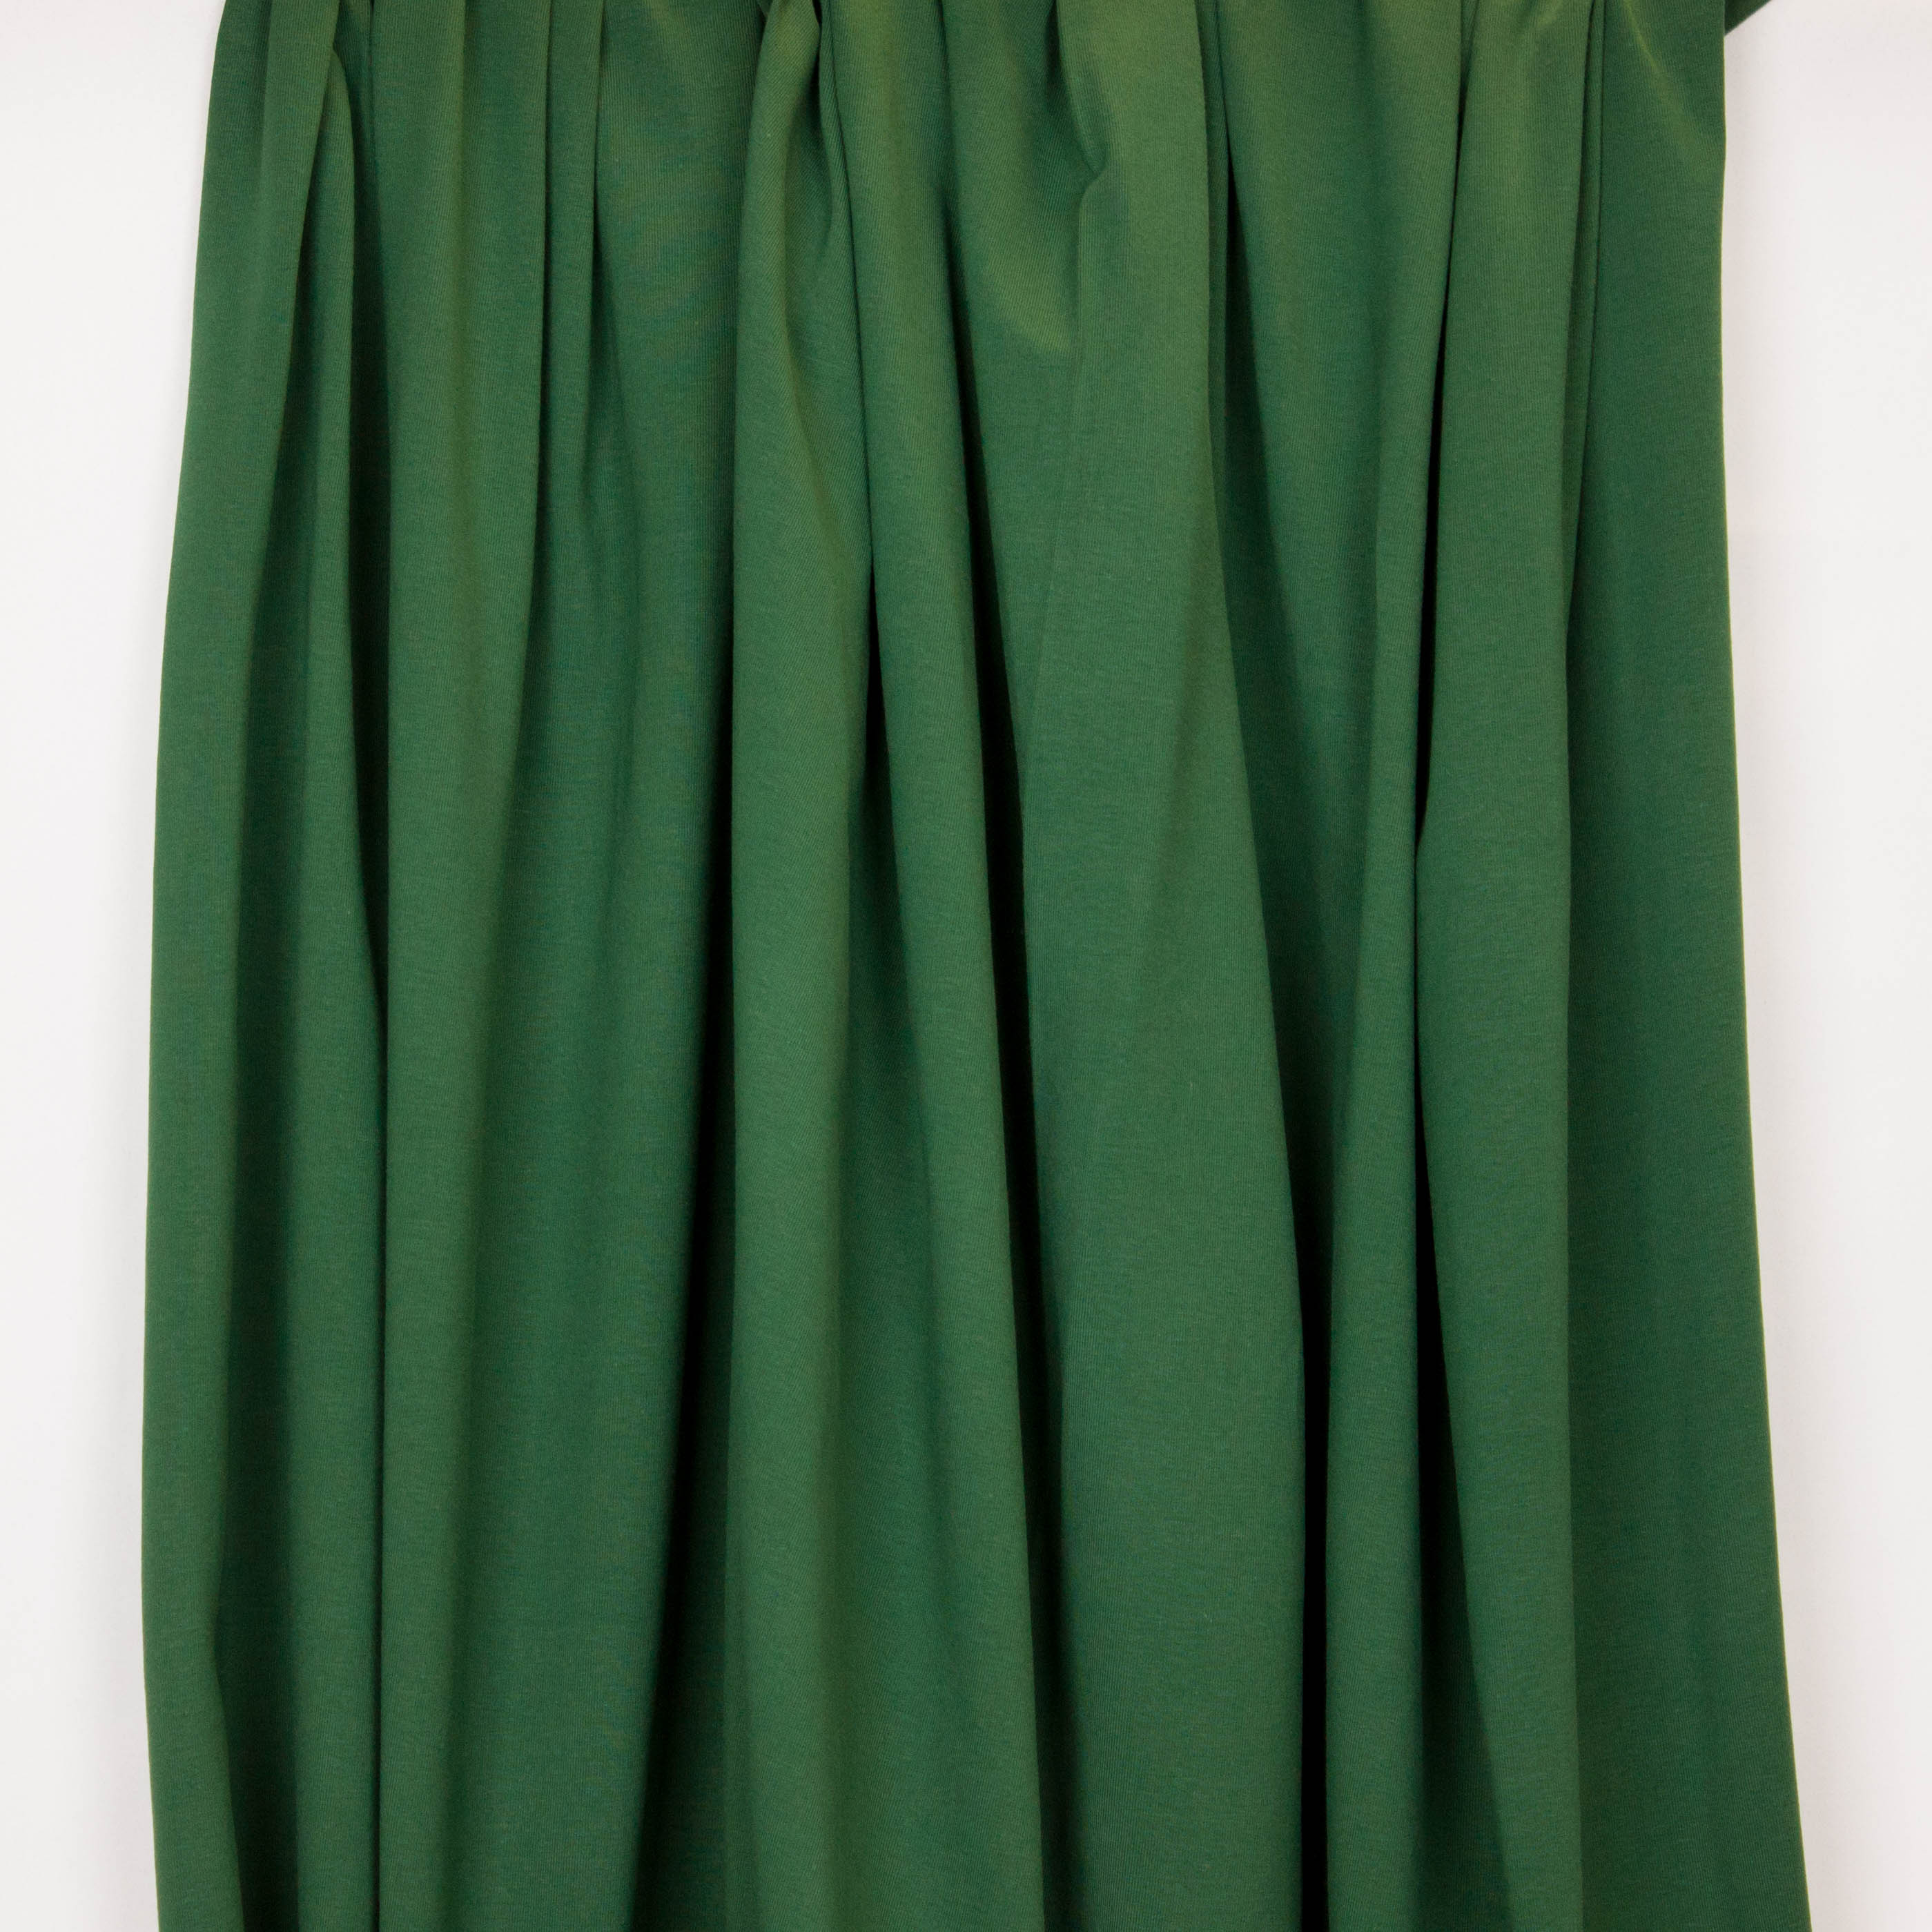 Katoen tricot groen